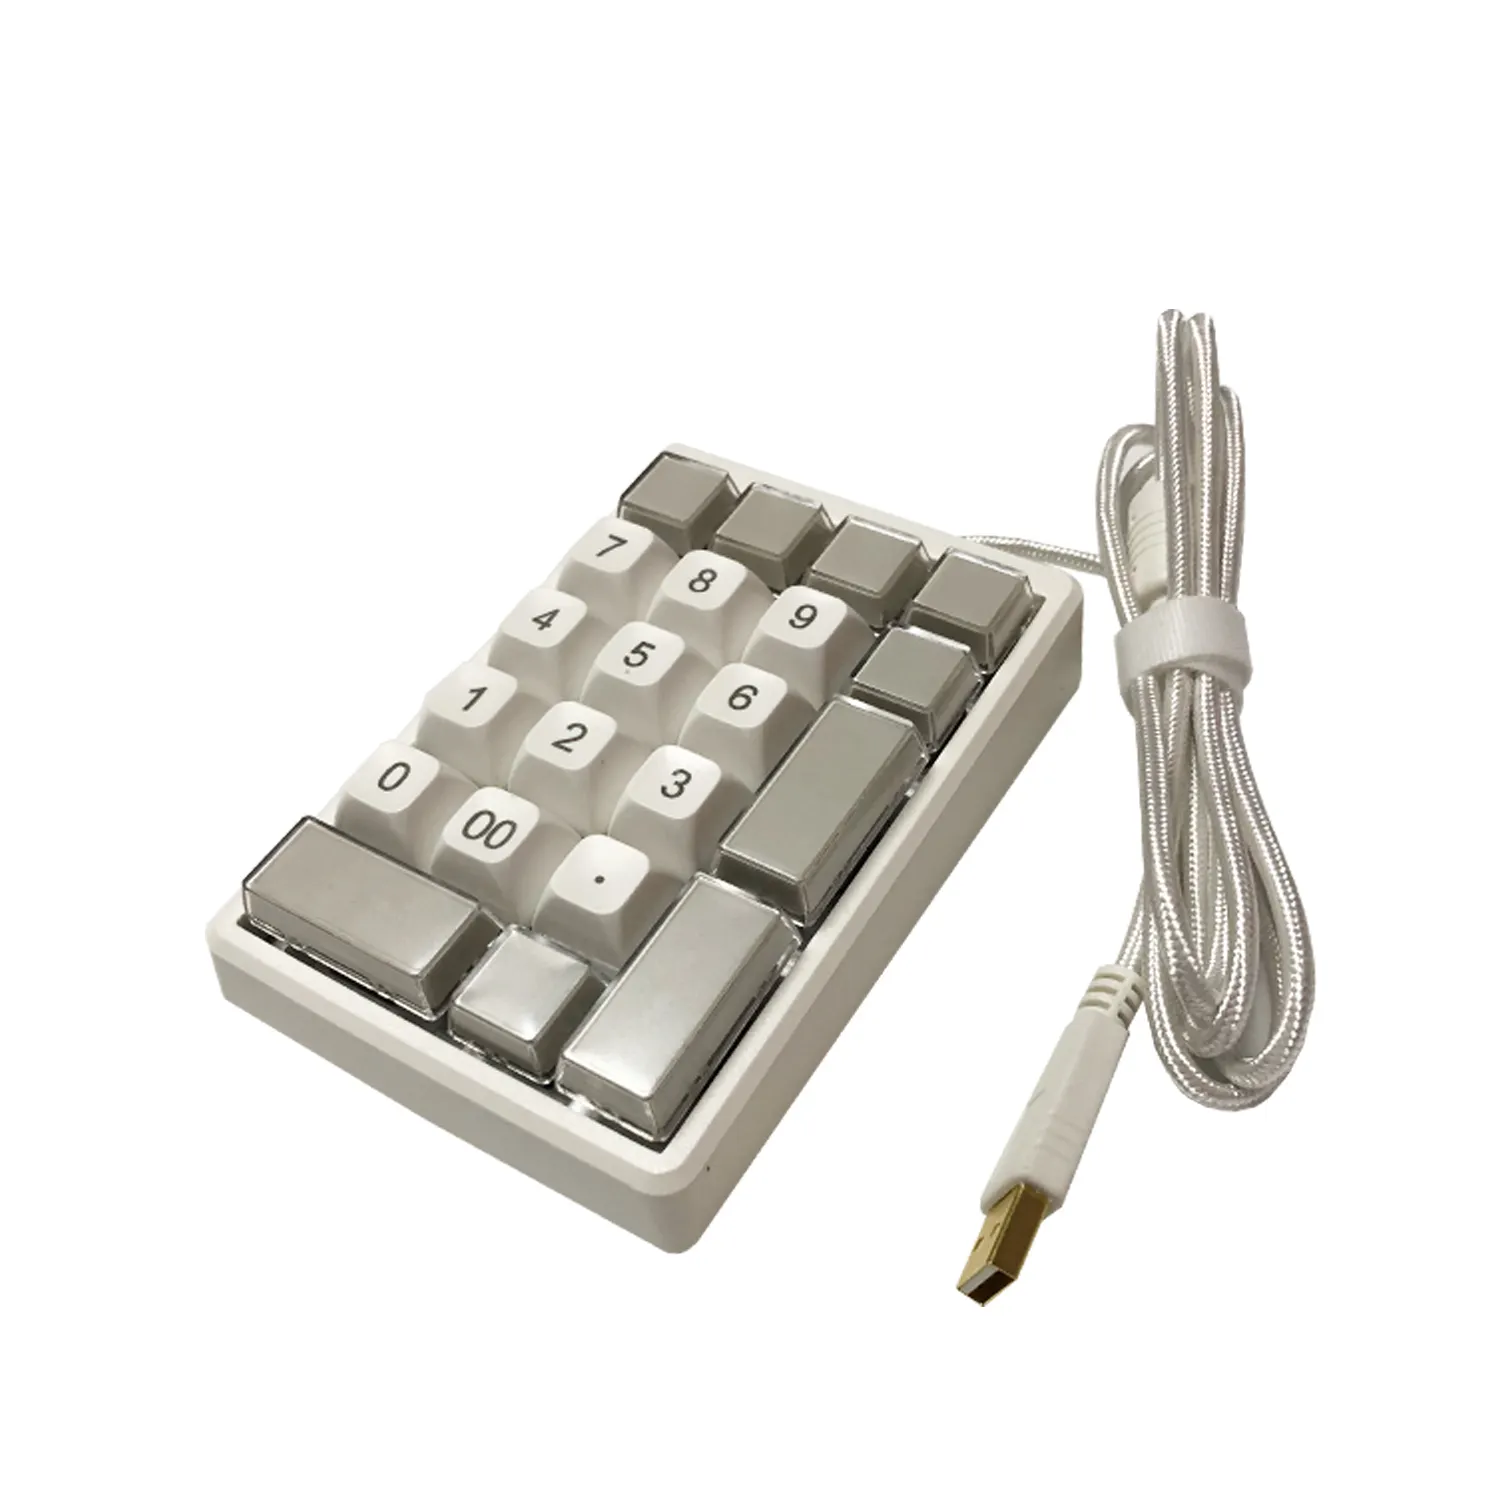 White 21Keys ABS Smart Backlight USB Programmable POS Keyboard KB21U